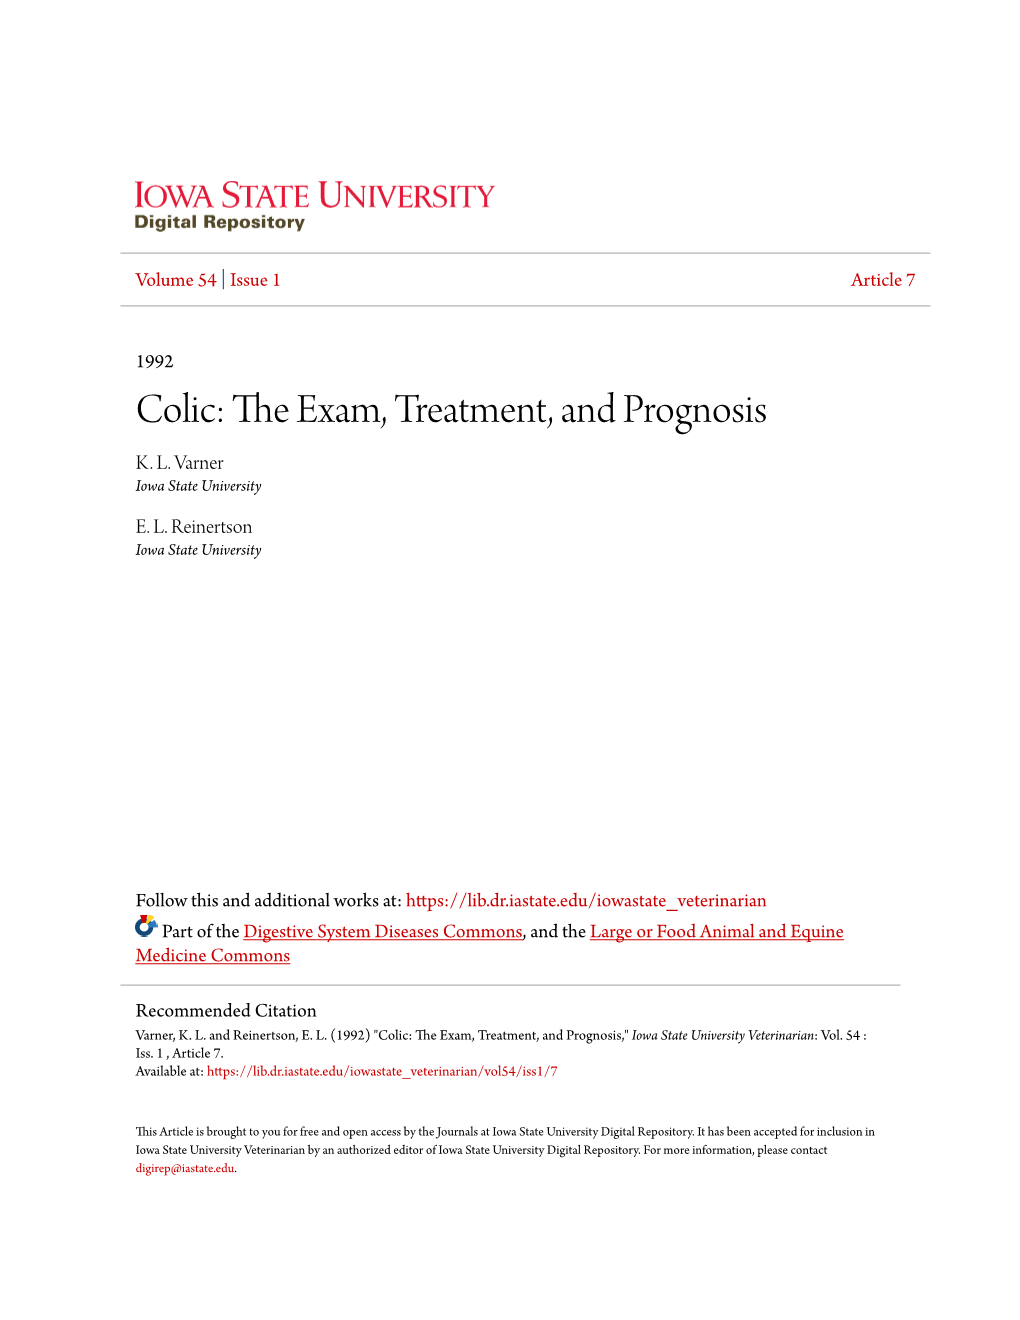 Colic: the Exam, Treatment, and Prognosis K